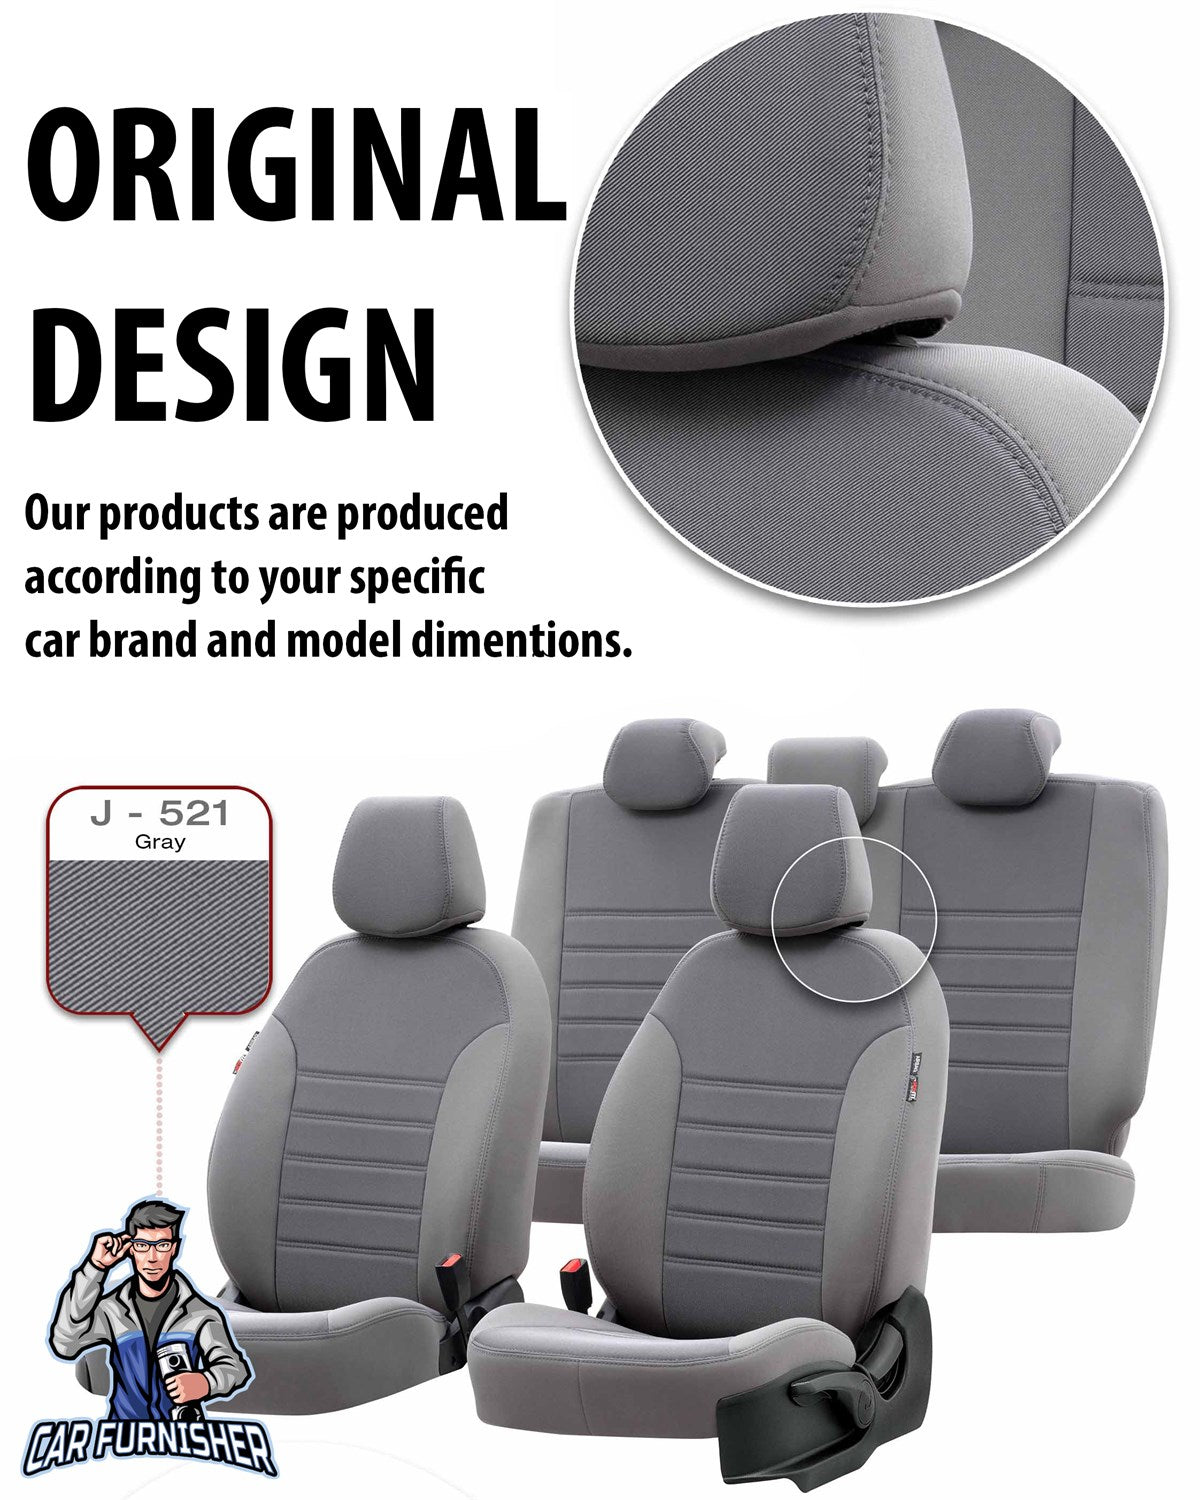 Opel Frontera Seat Cover Original Jacquard Design Blue Jacquard Fabric